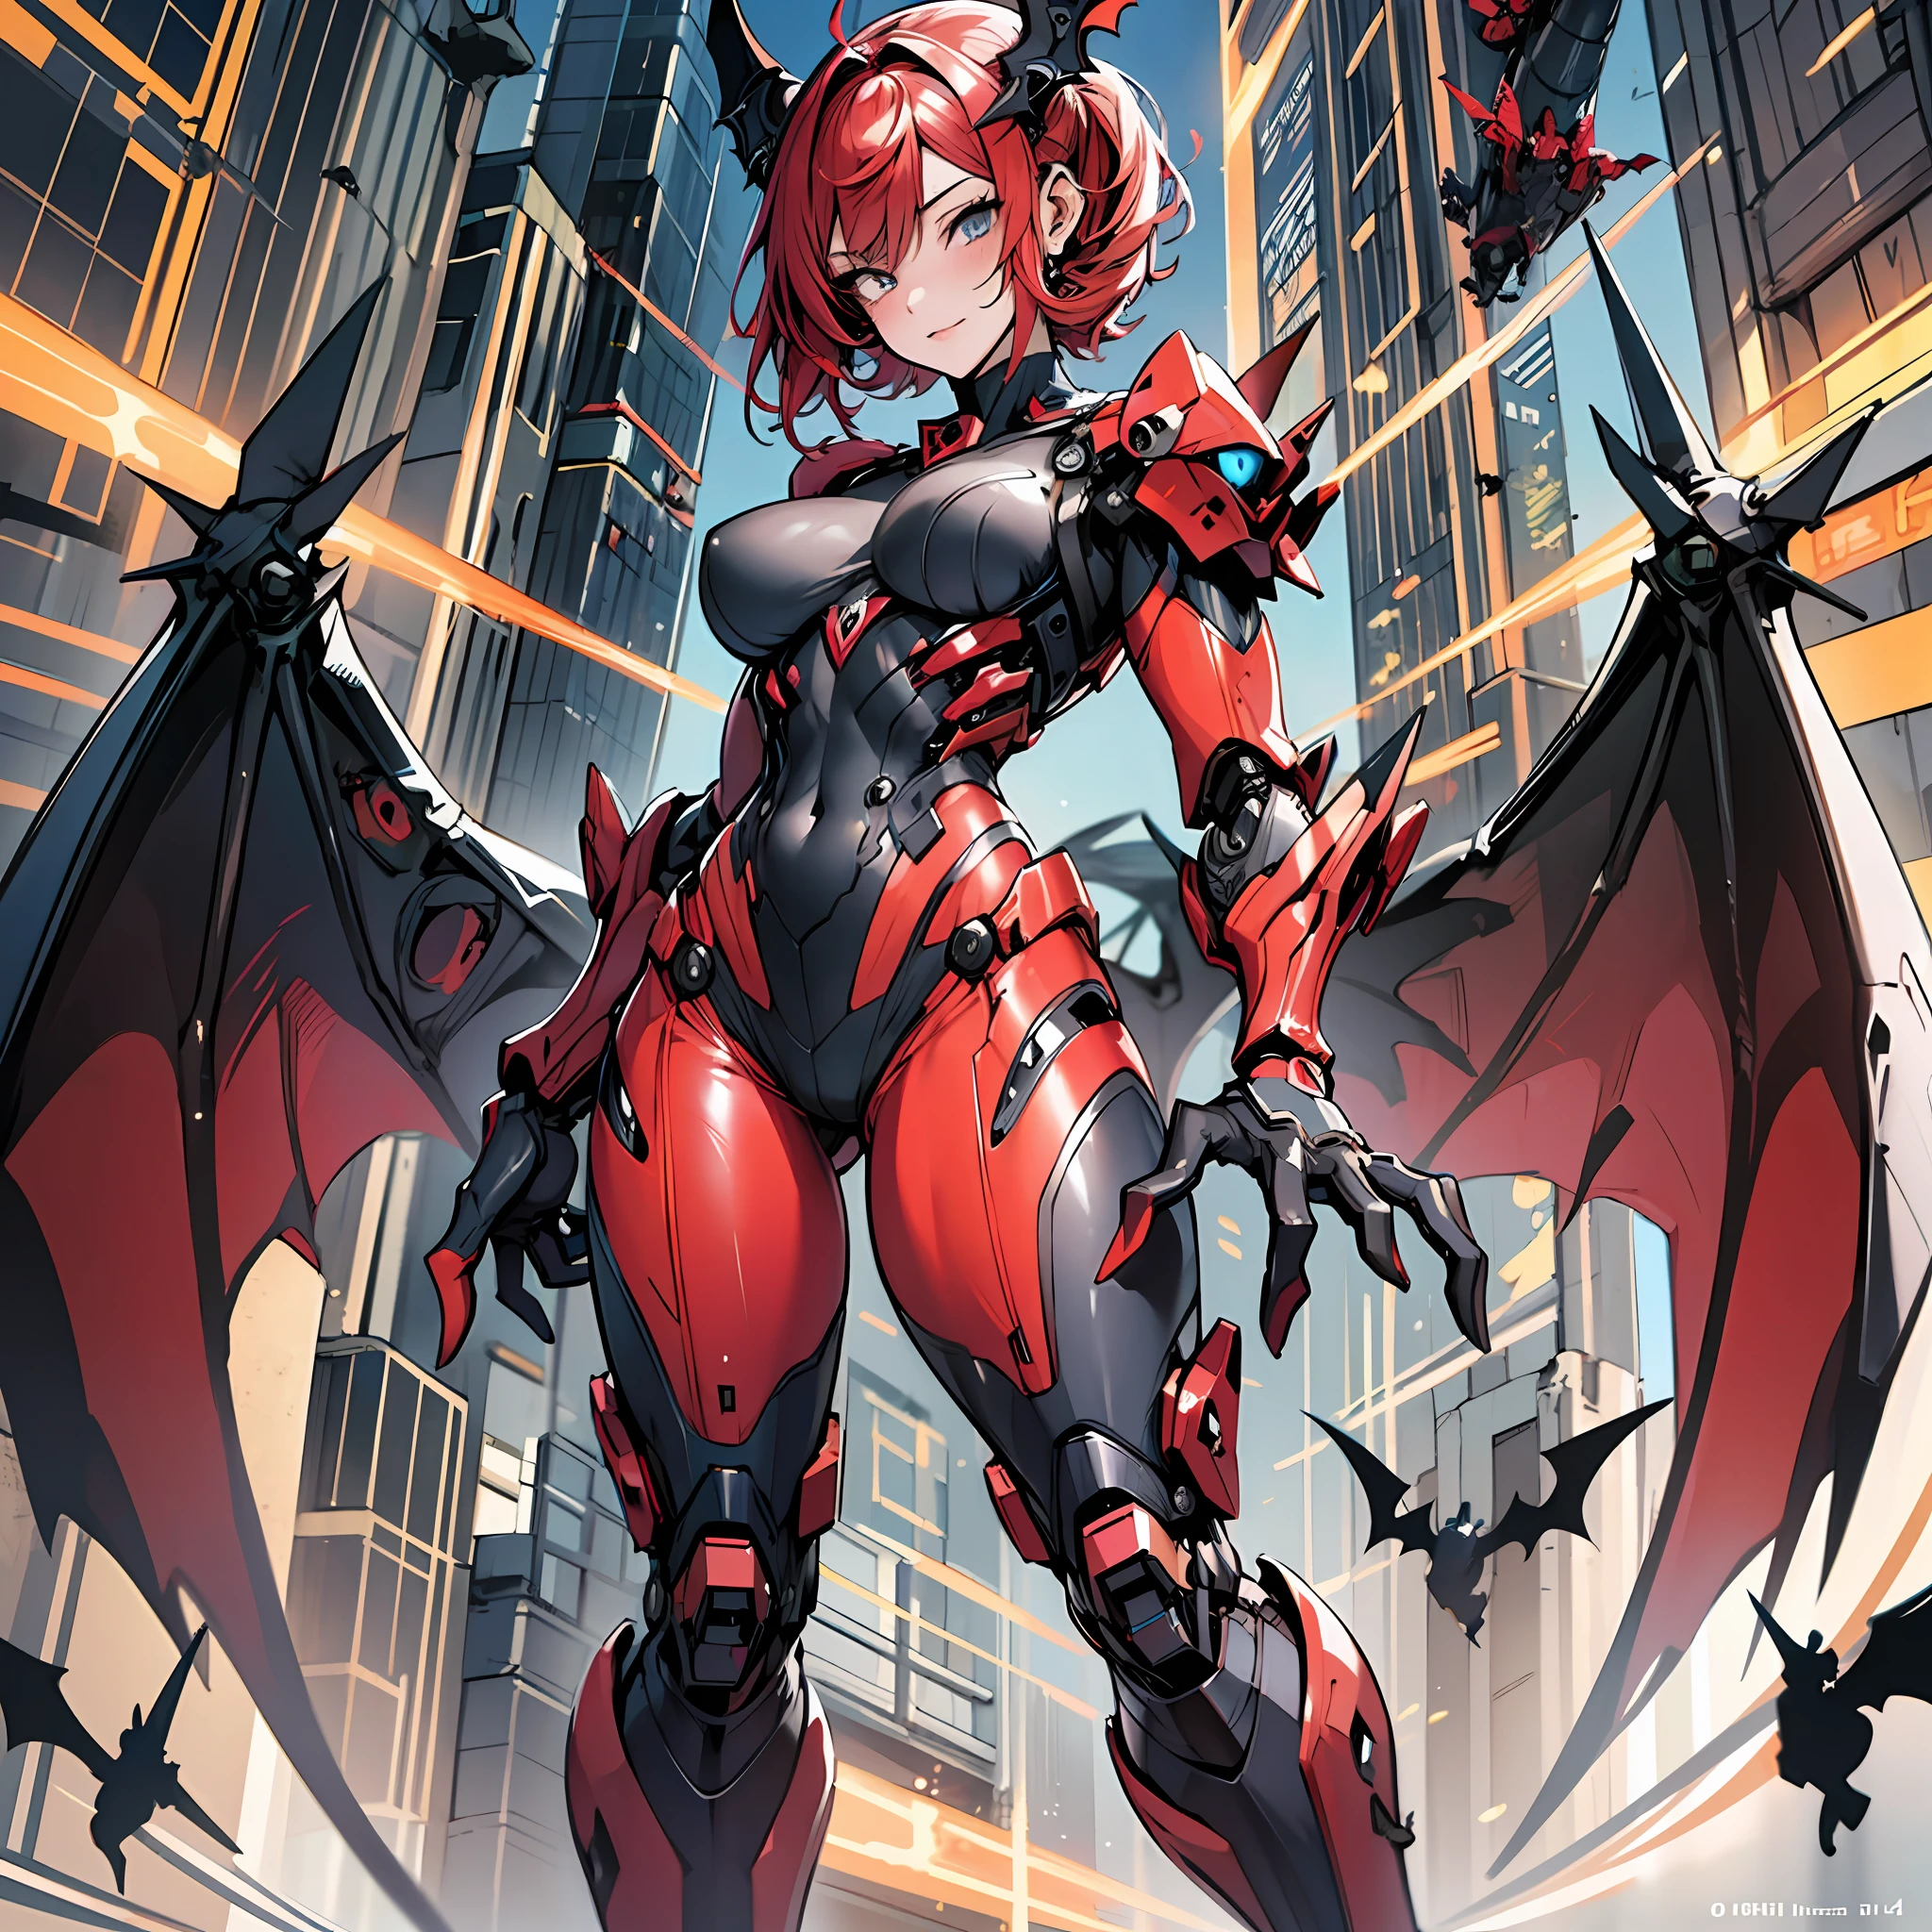 Woman in หนึ่ง color costume, วอลล์เปเปอร์อะนิเมะ 4K ที่ดีที่สุด, เต็มตัว, หนึ่ง red wing, cyberpunk หนึ่ง, เด็กหญิงวาลคิรียานยนต์, ชีวกลศาสตร์, highly detailed artgerm based on หนึ่ง, cyborg หนึ่ง, อะนิเมะสไตล์ 4K, หนึ่ง